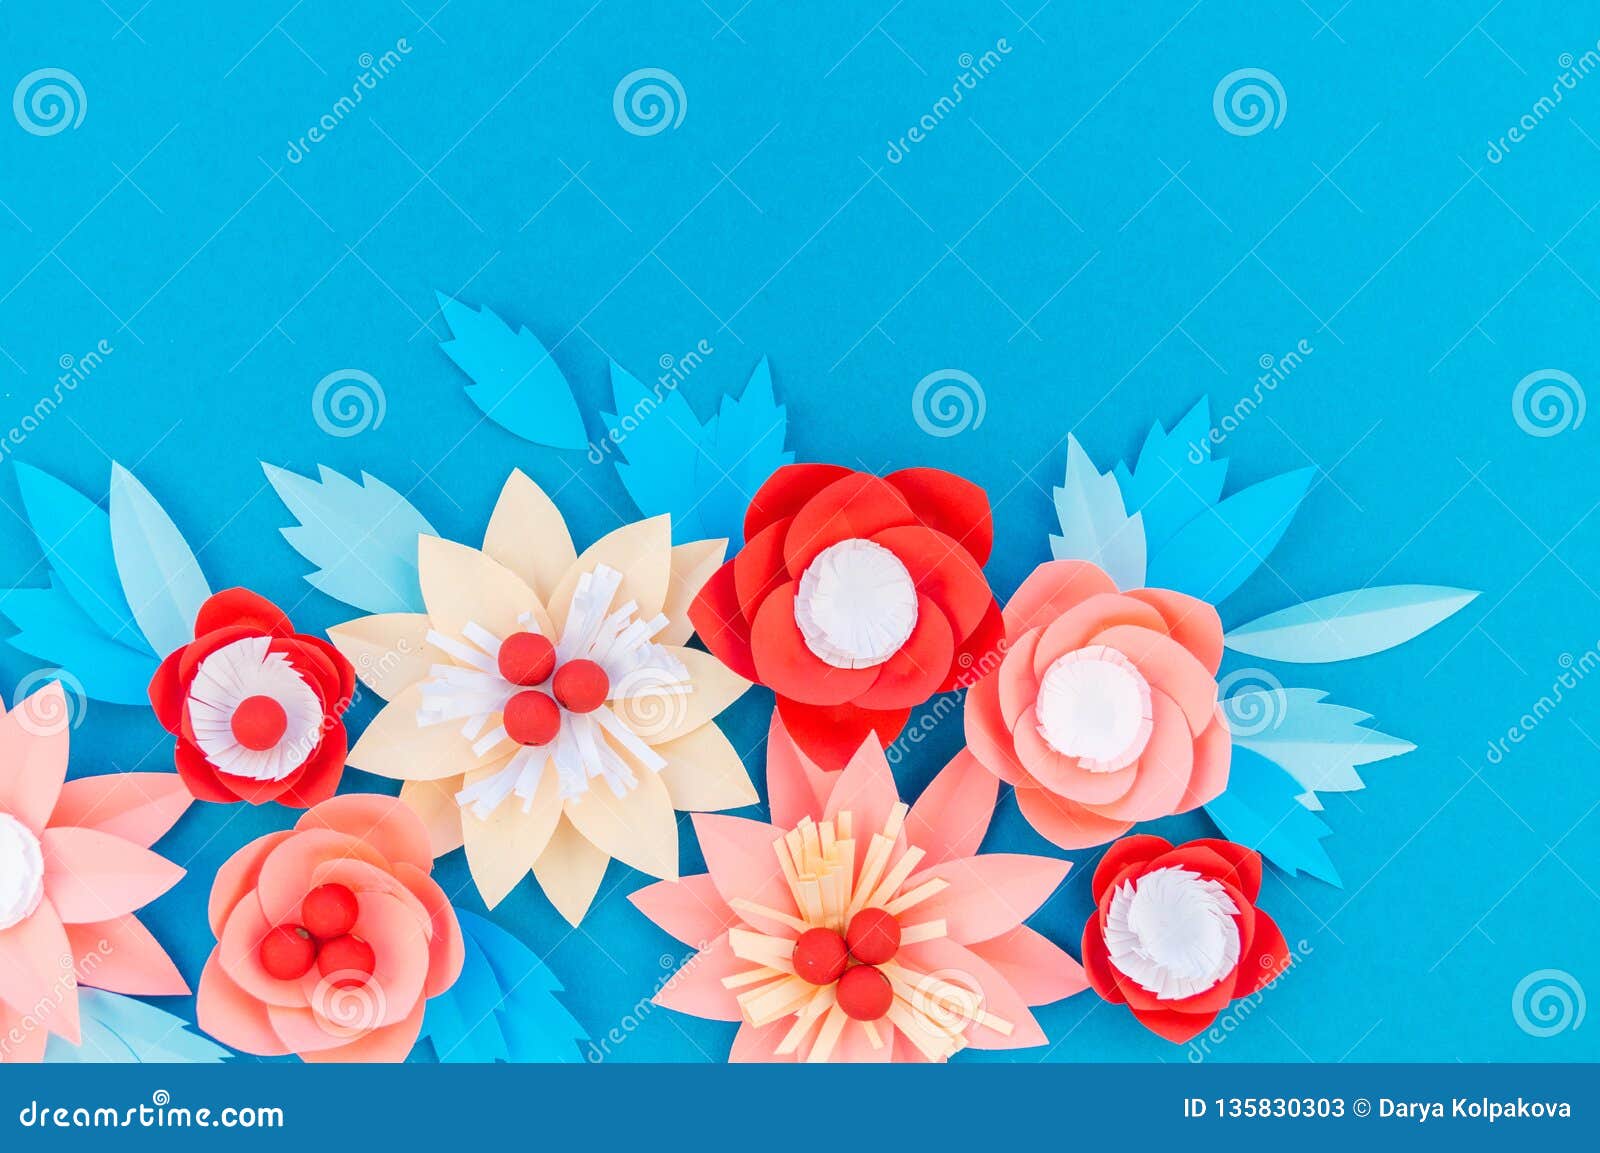 paper flower for christmas decor. color coral fashion pastel